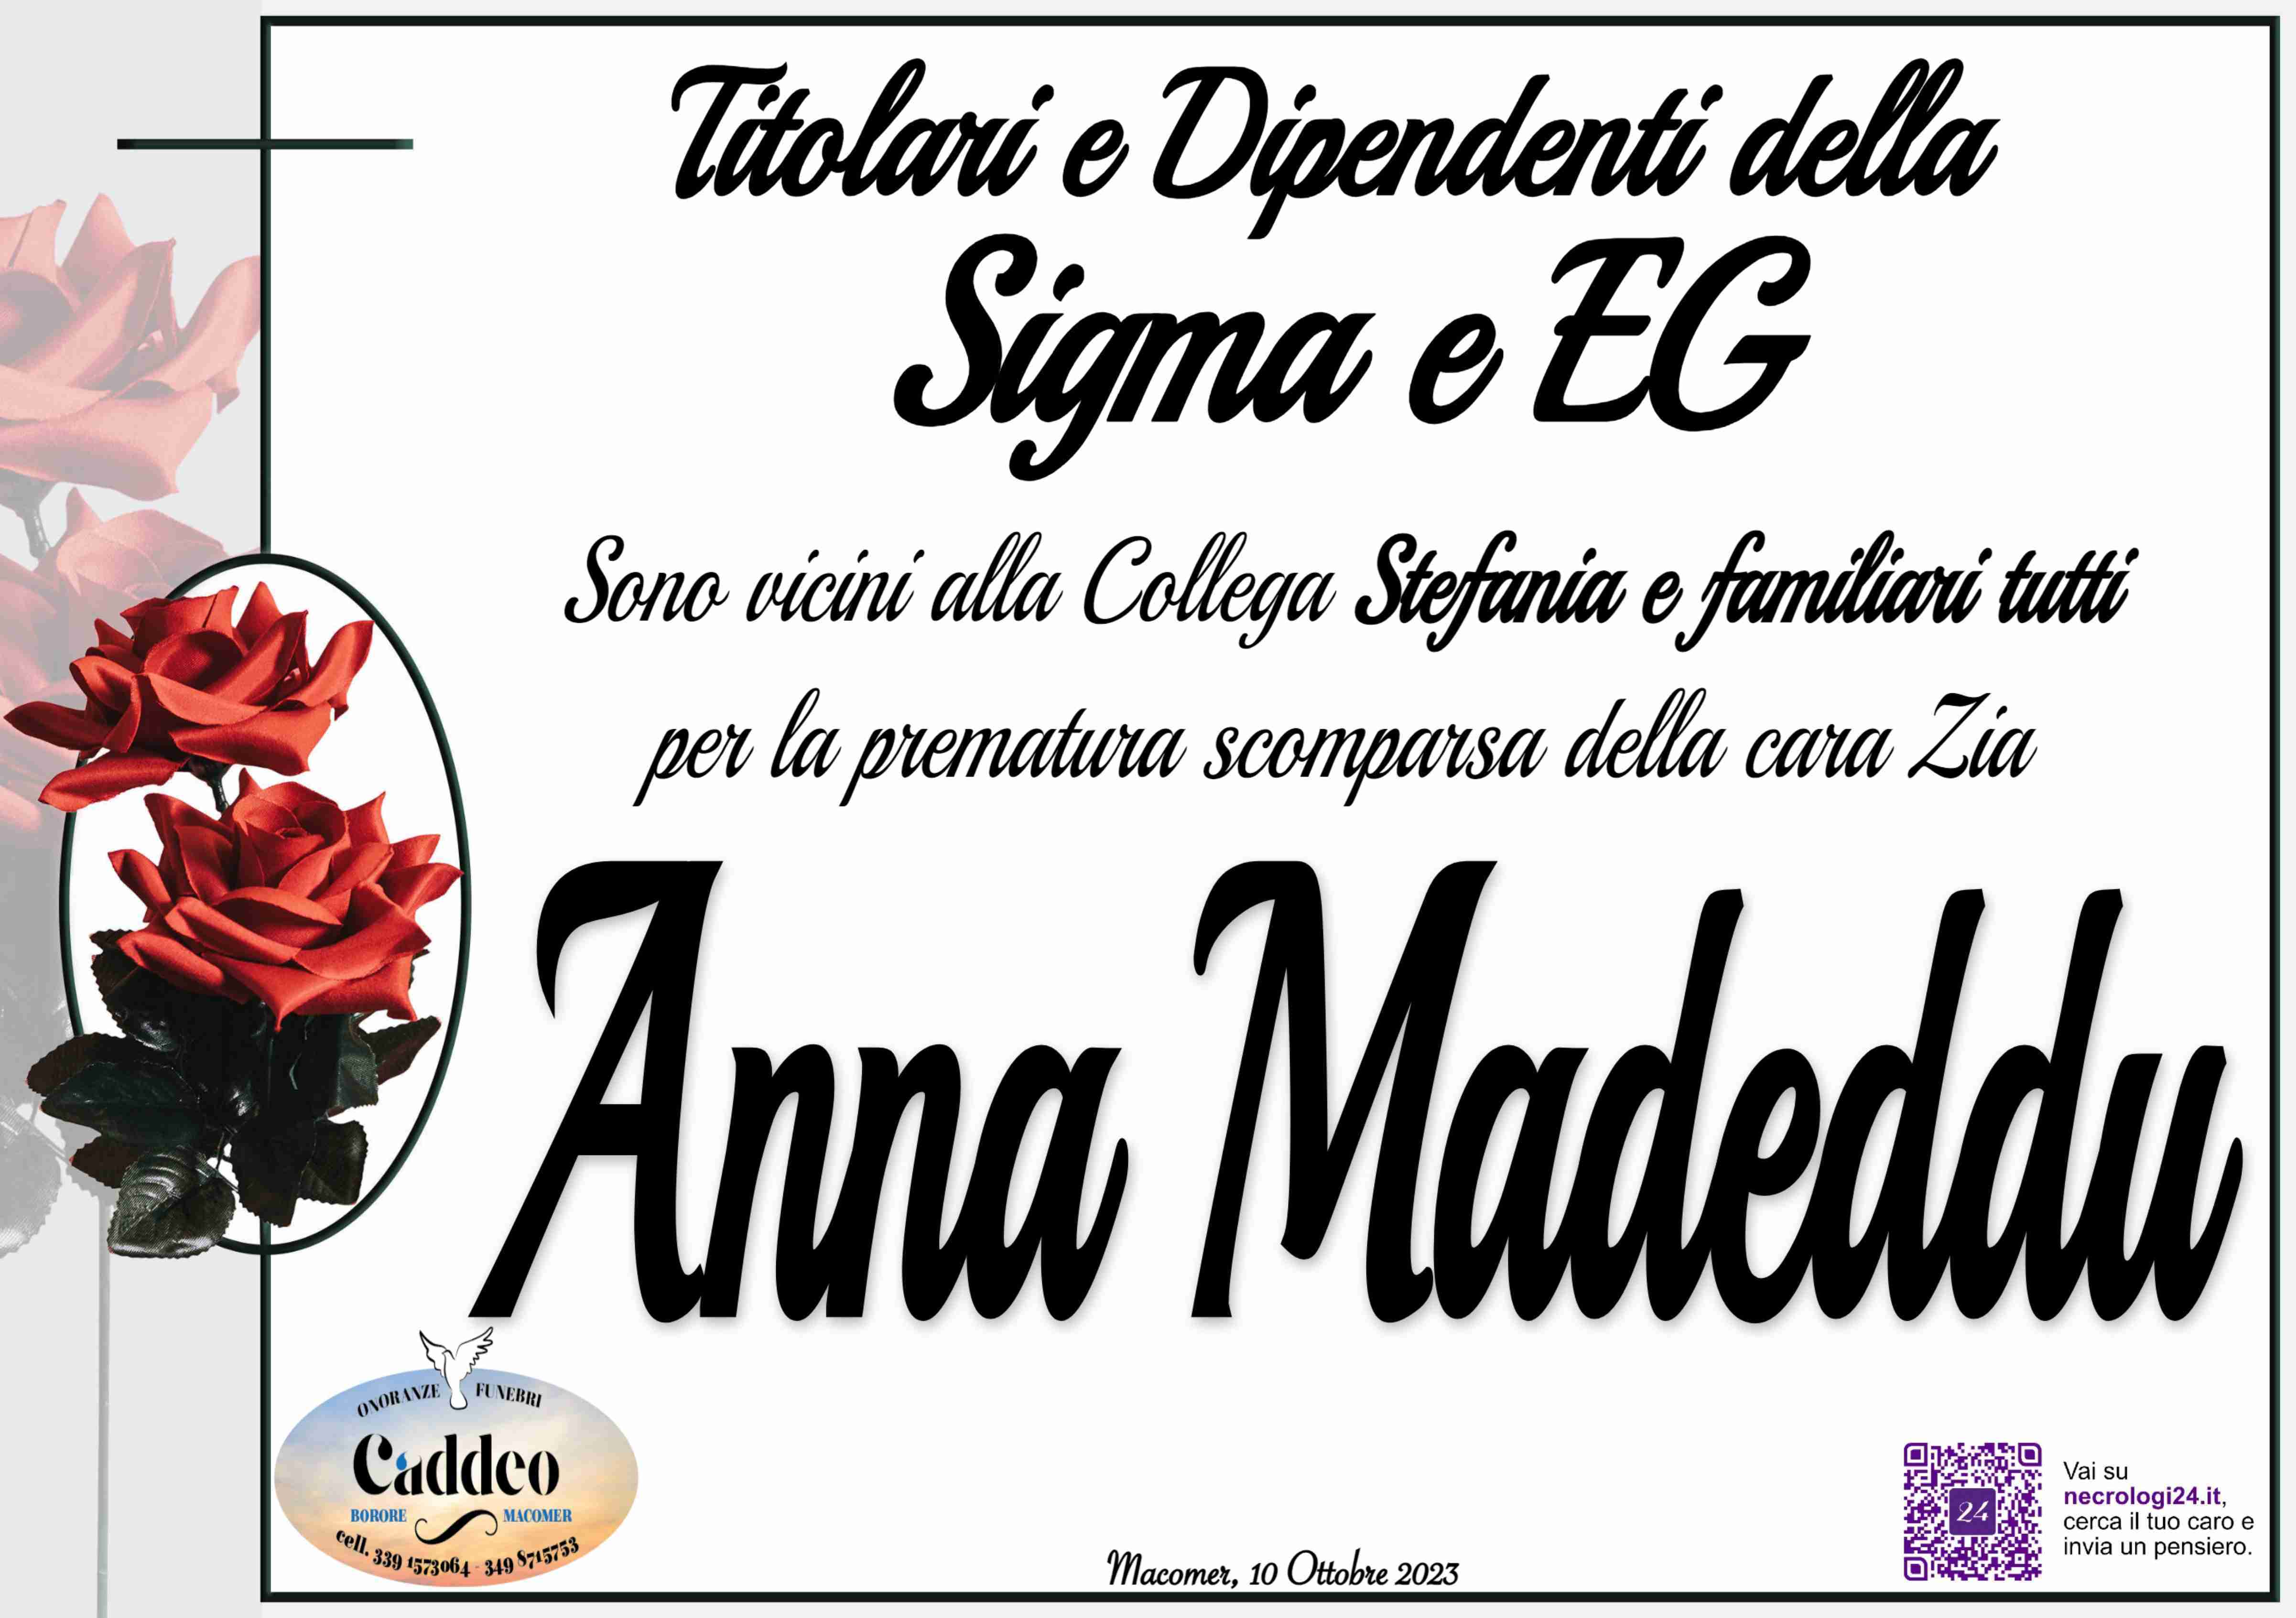 Anna Madeddu